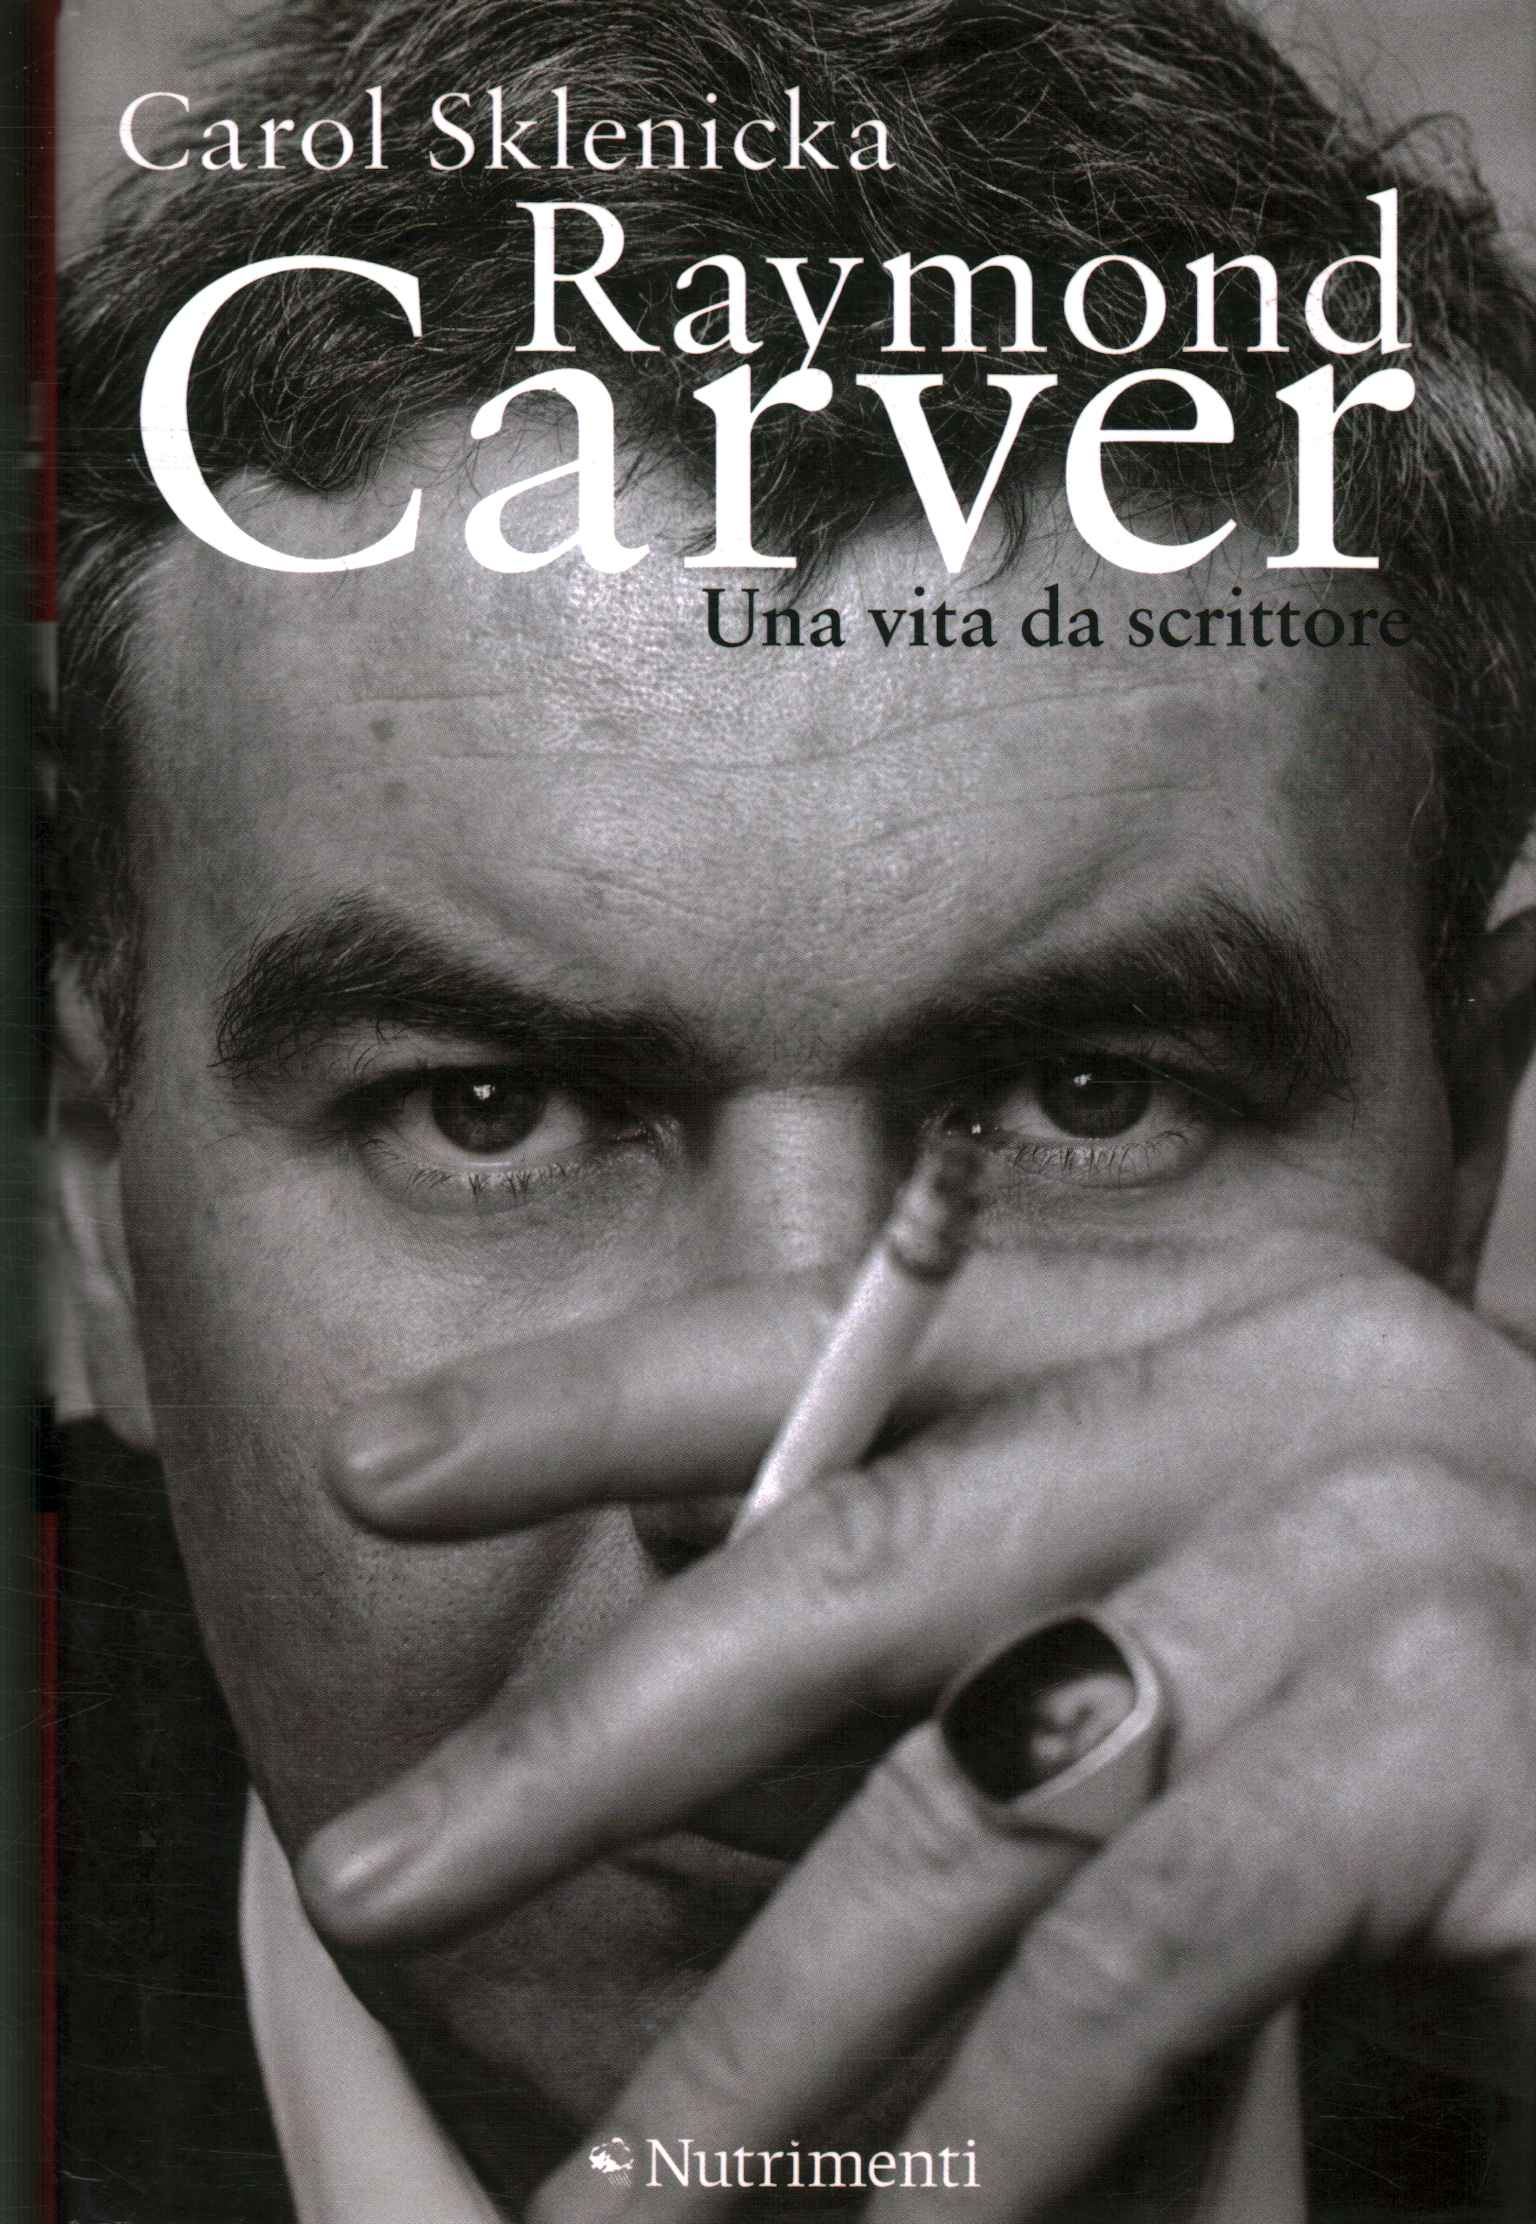 Raymond Carver. A life as a writer